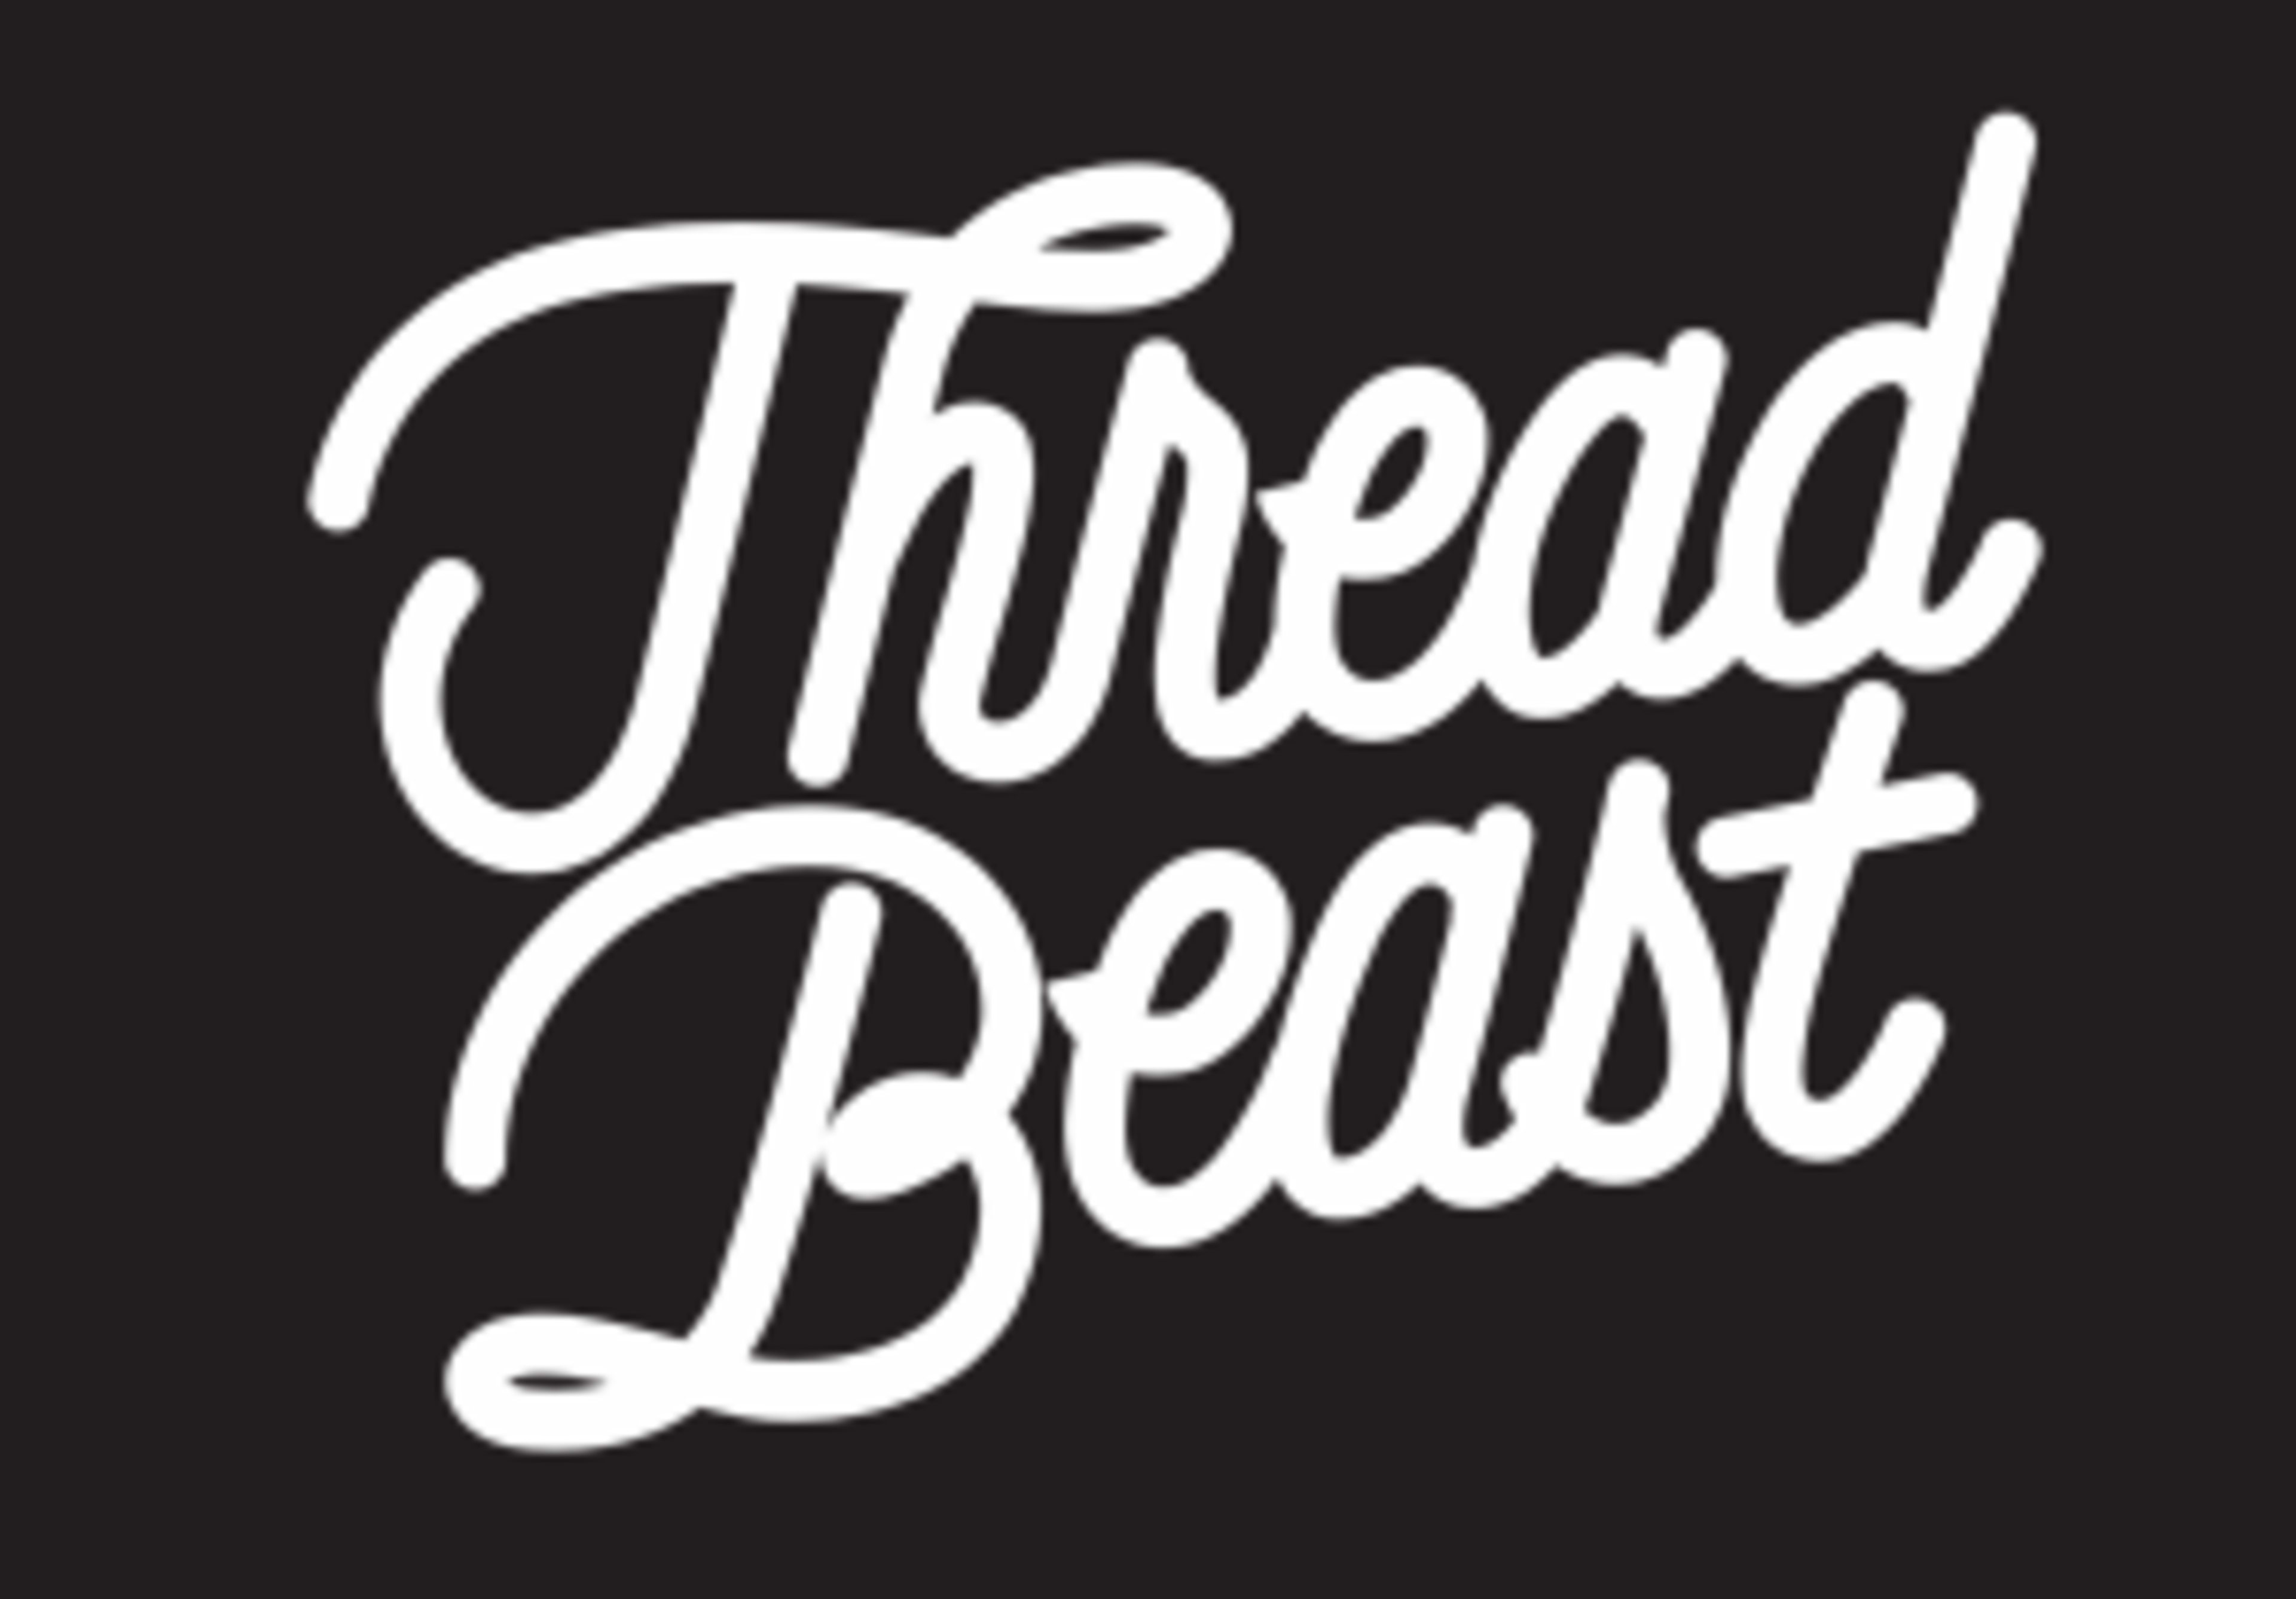 ThreadBeast Code